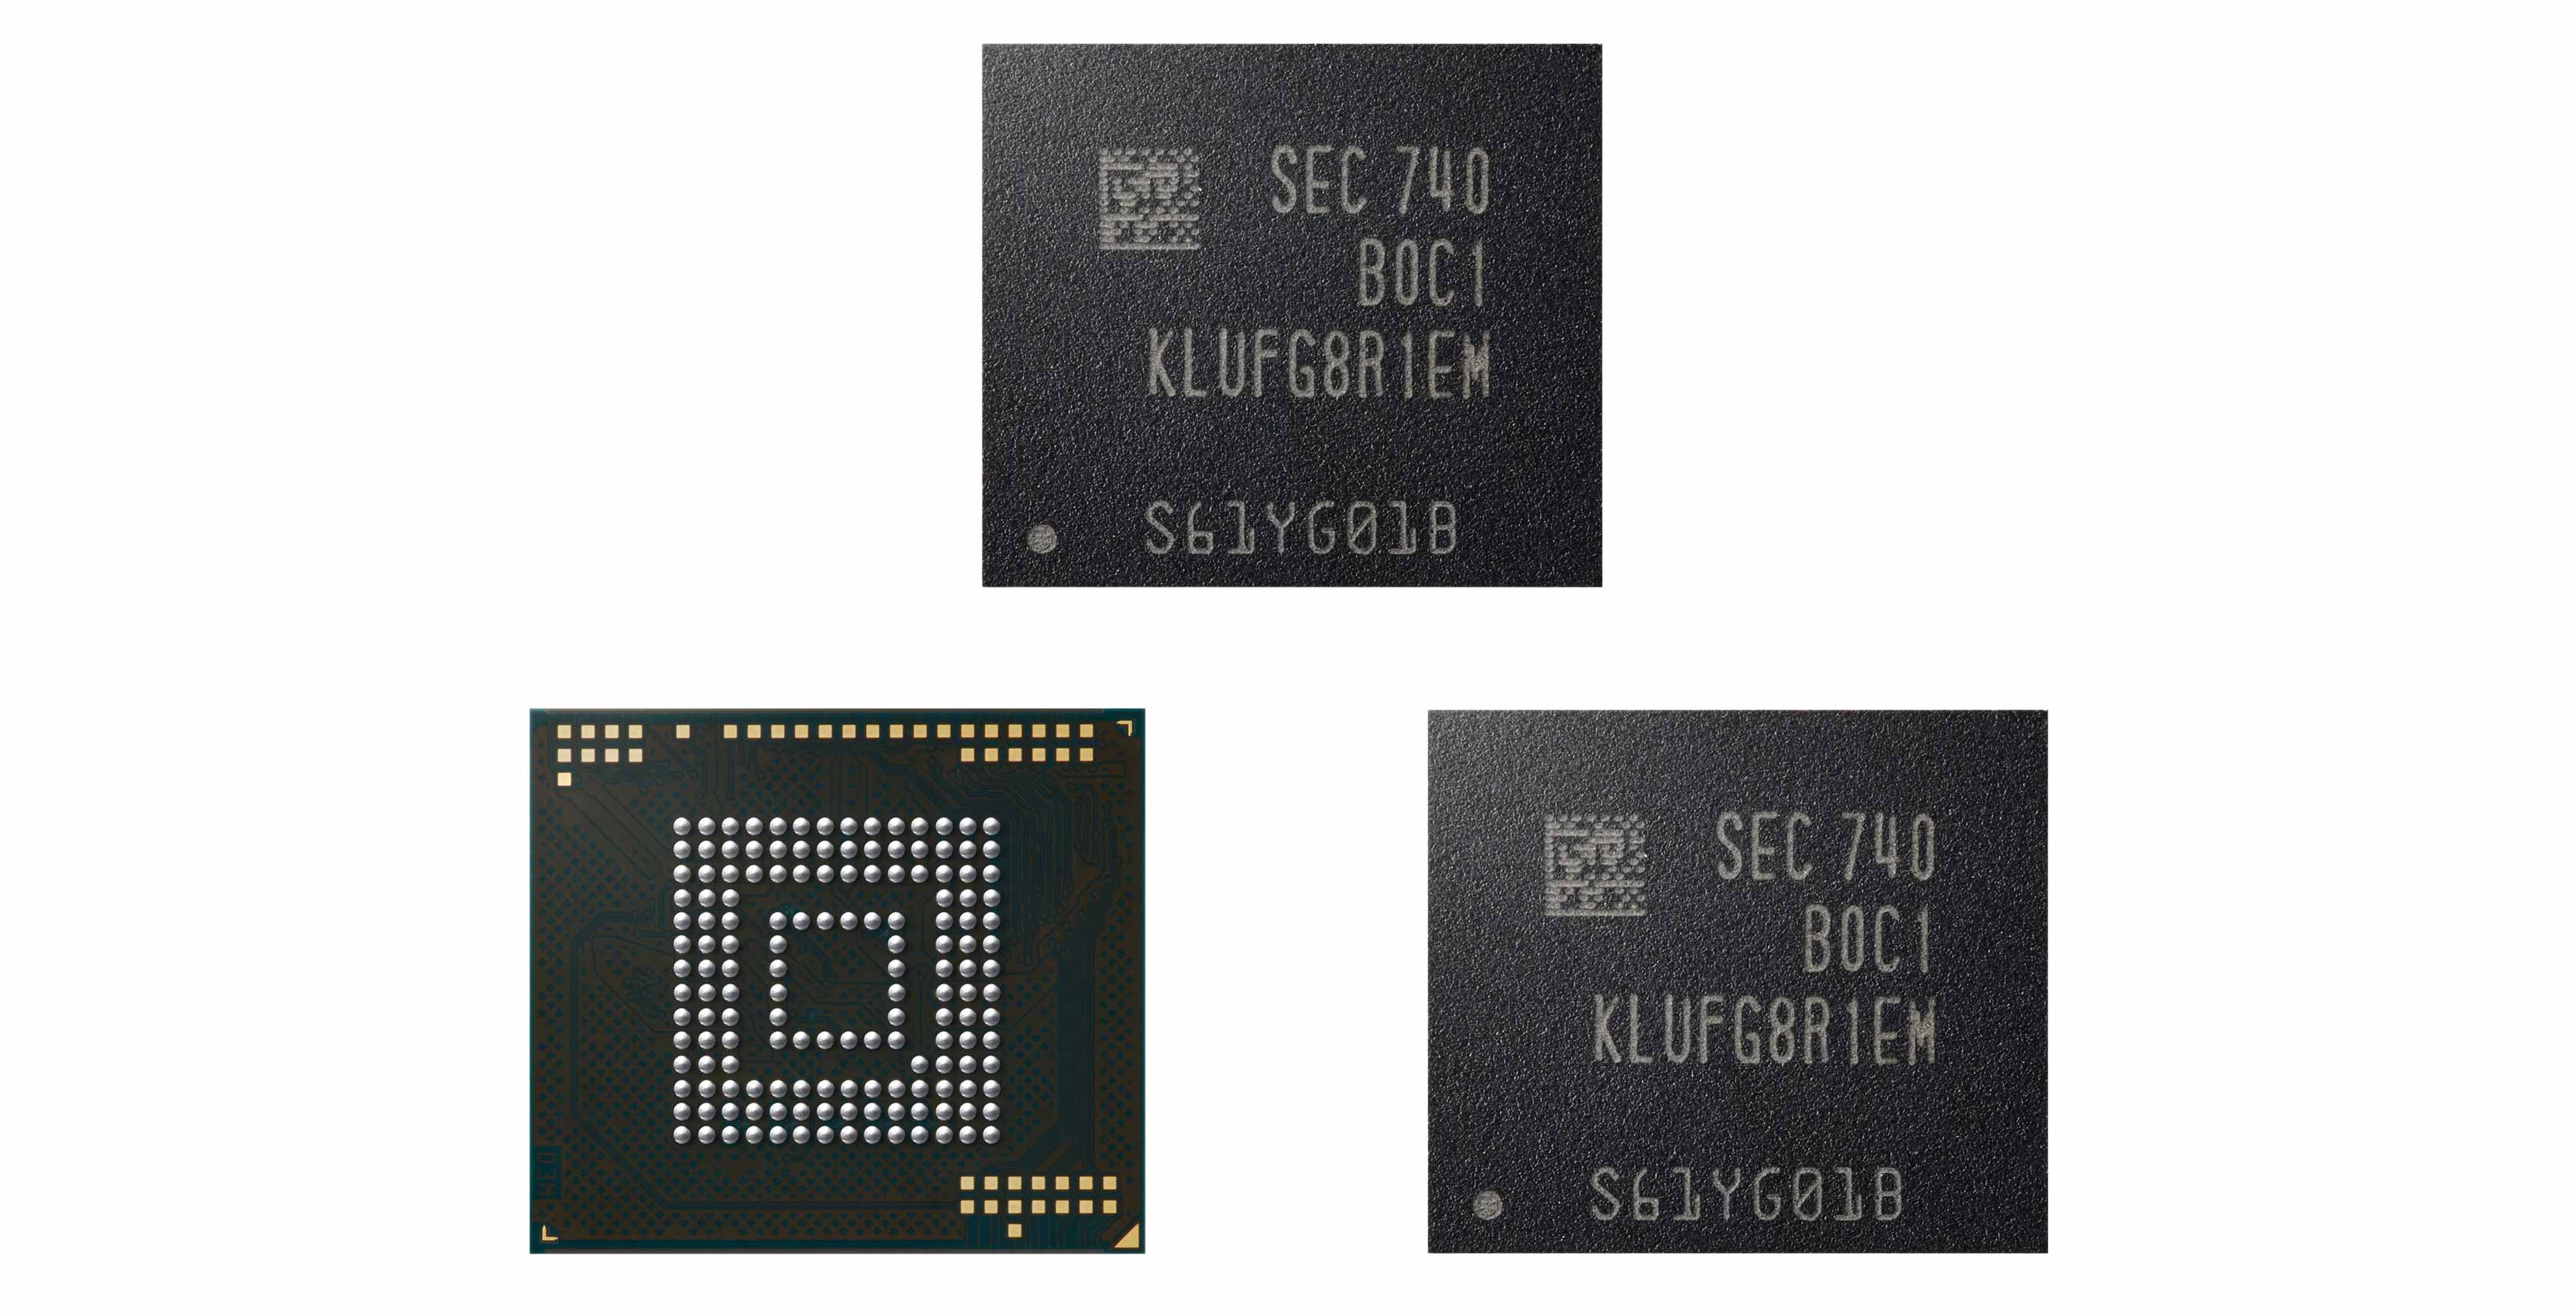 Samsung's new 512GB eUFS NAND chip